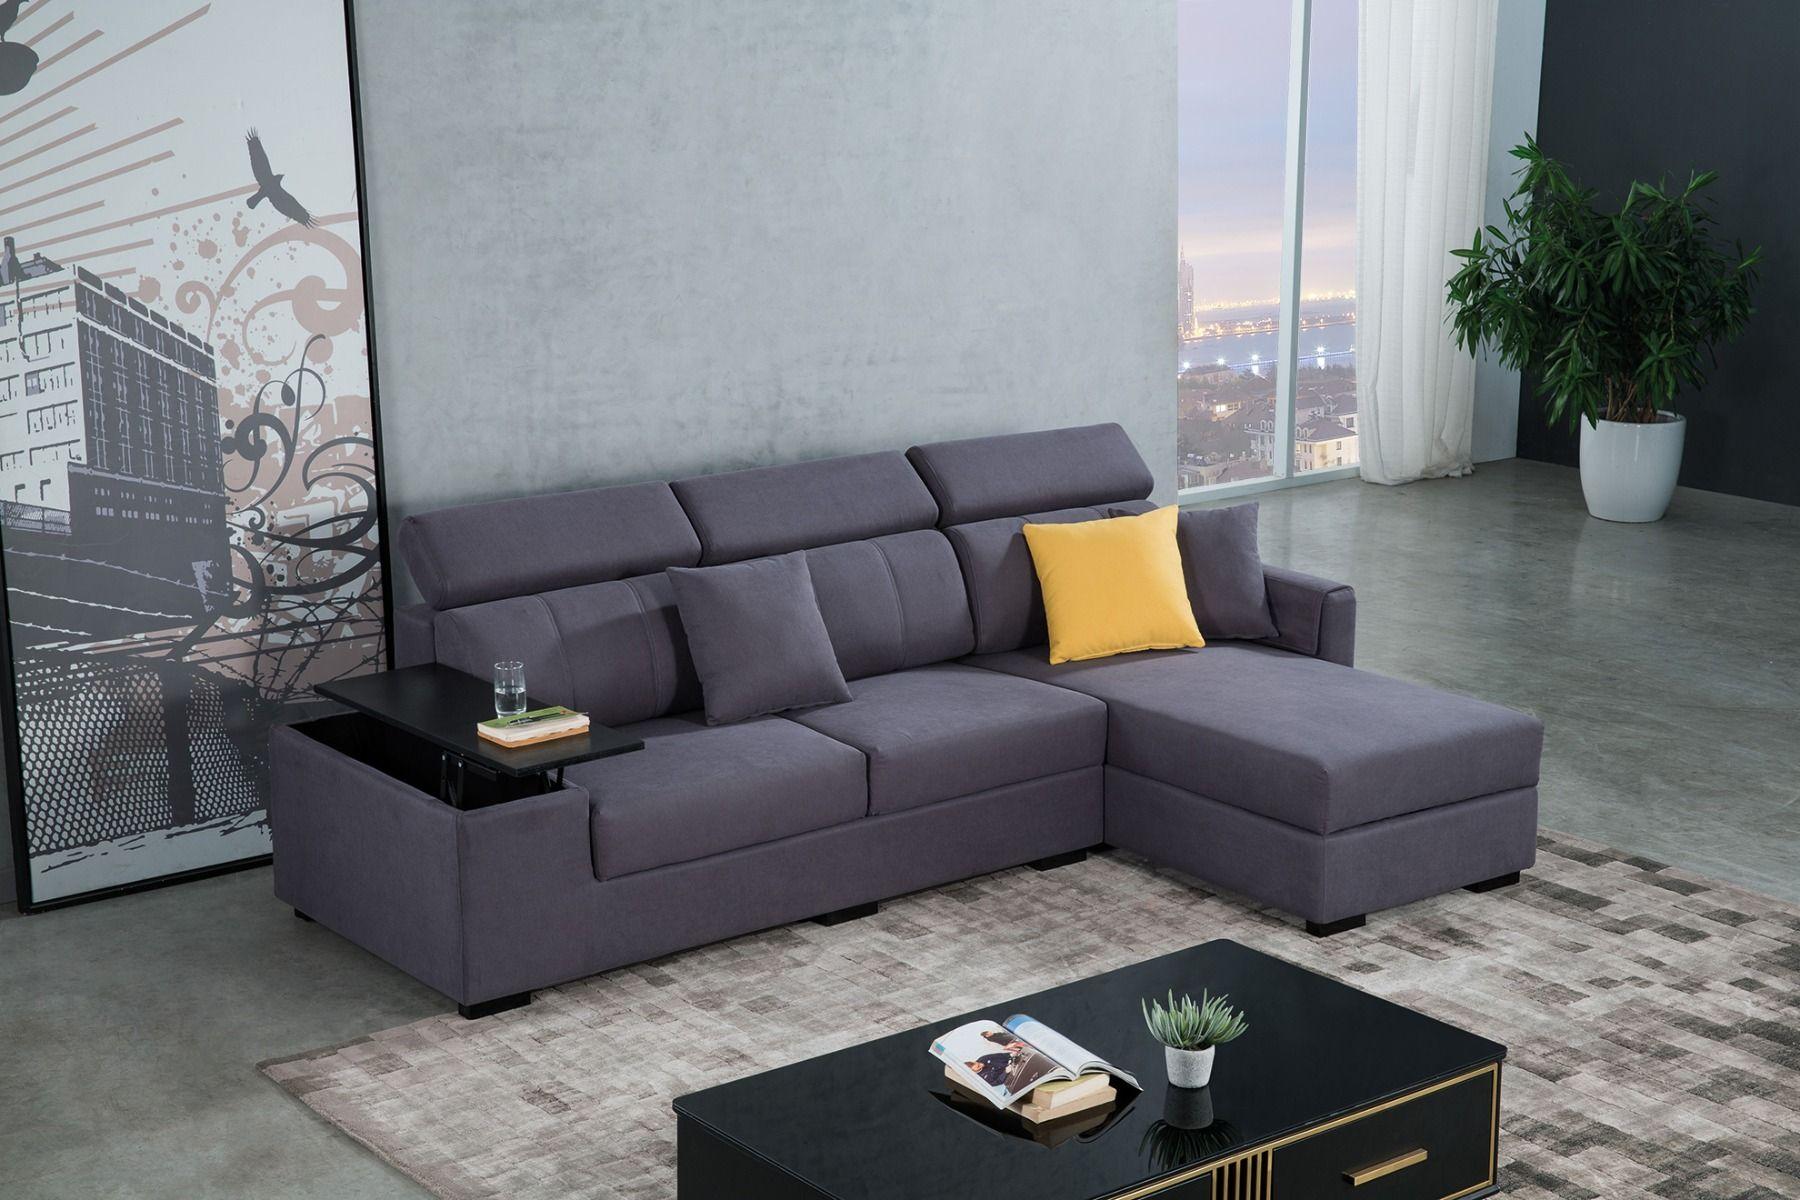 

    
American Eagle Furniture AE-LD829 Sectional Sofa Gray AE-LD829L
